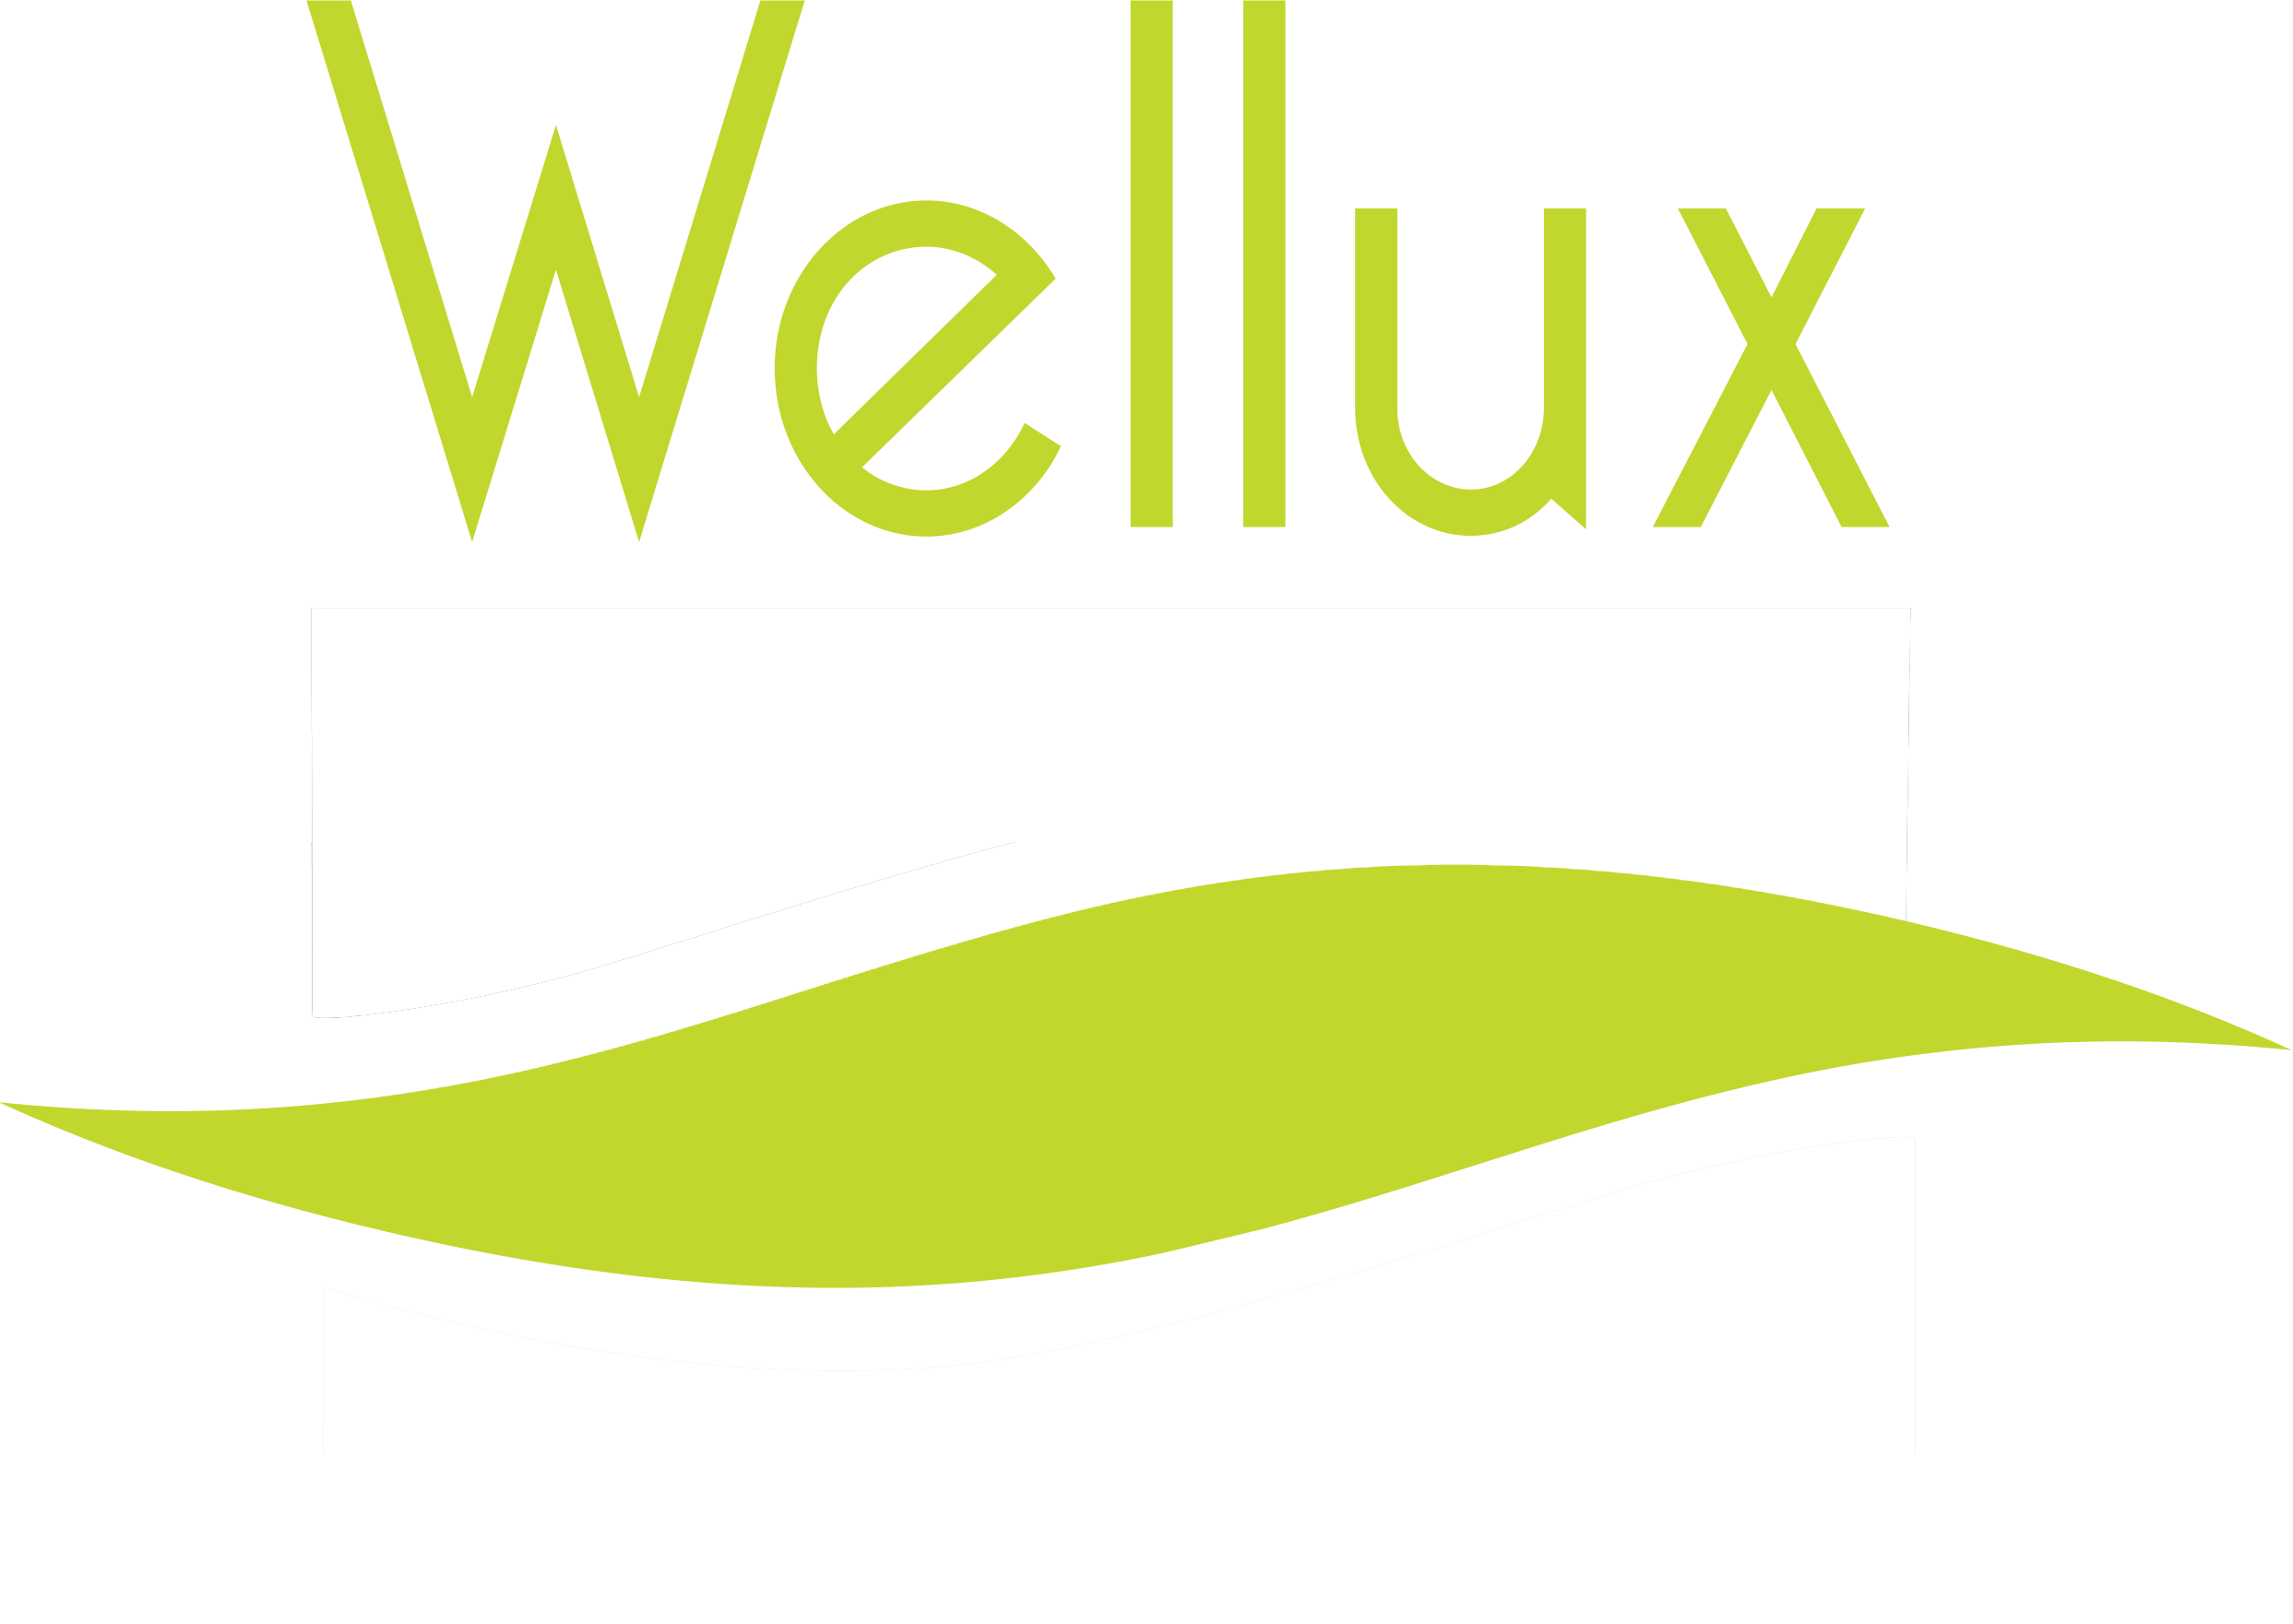 Wellux